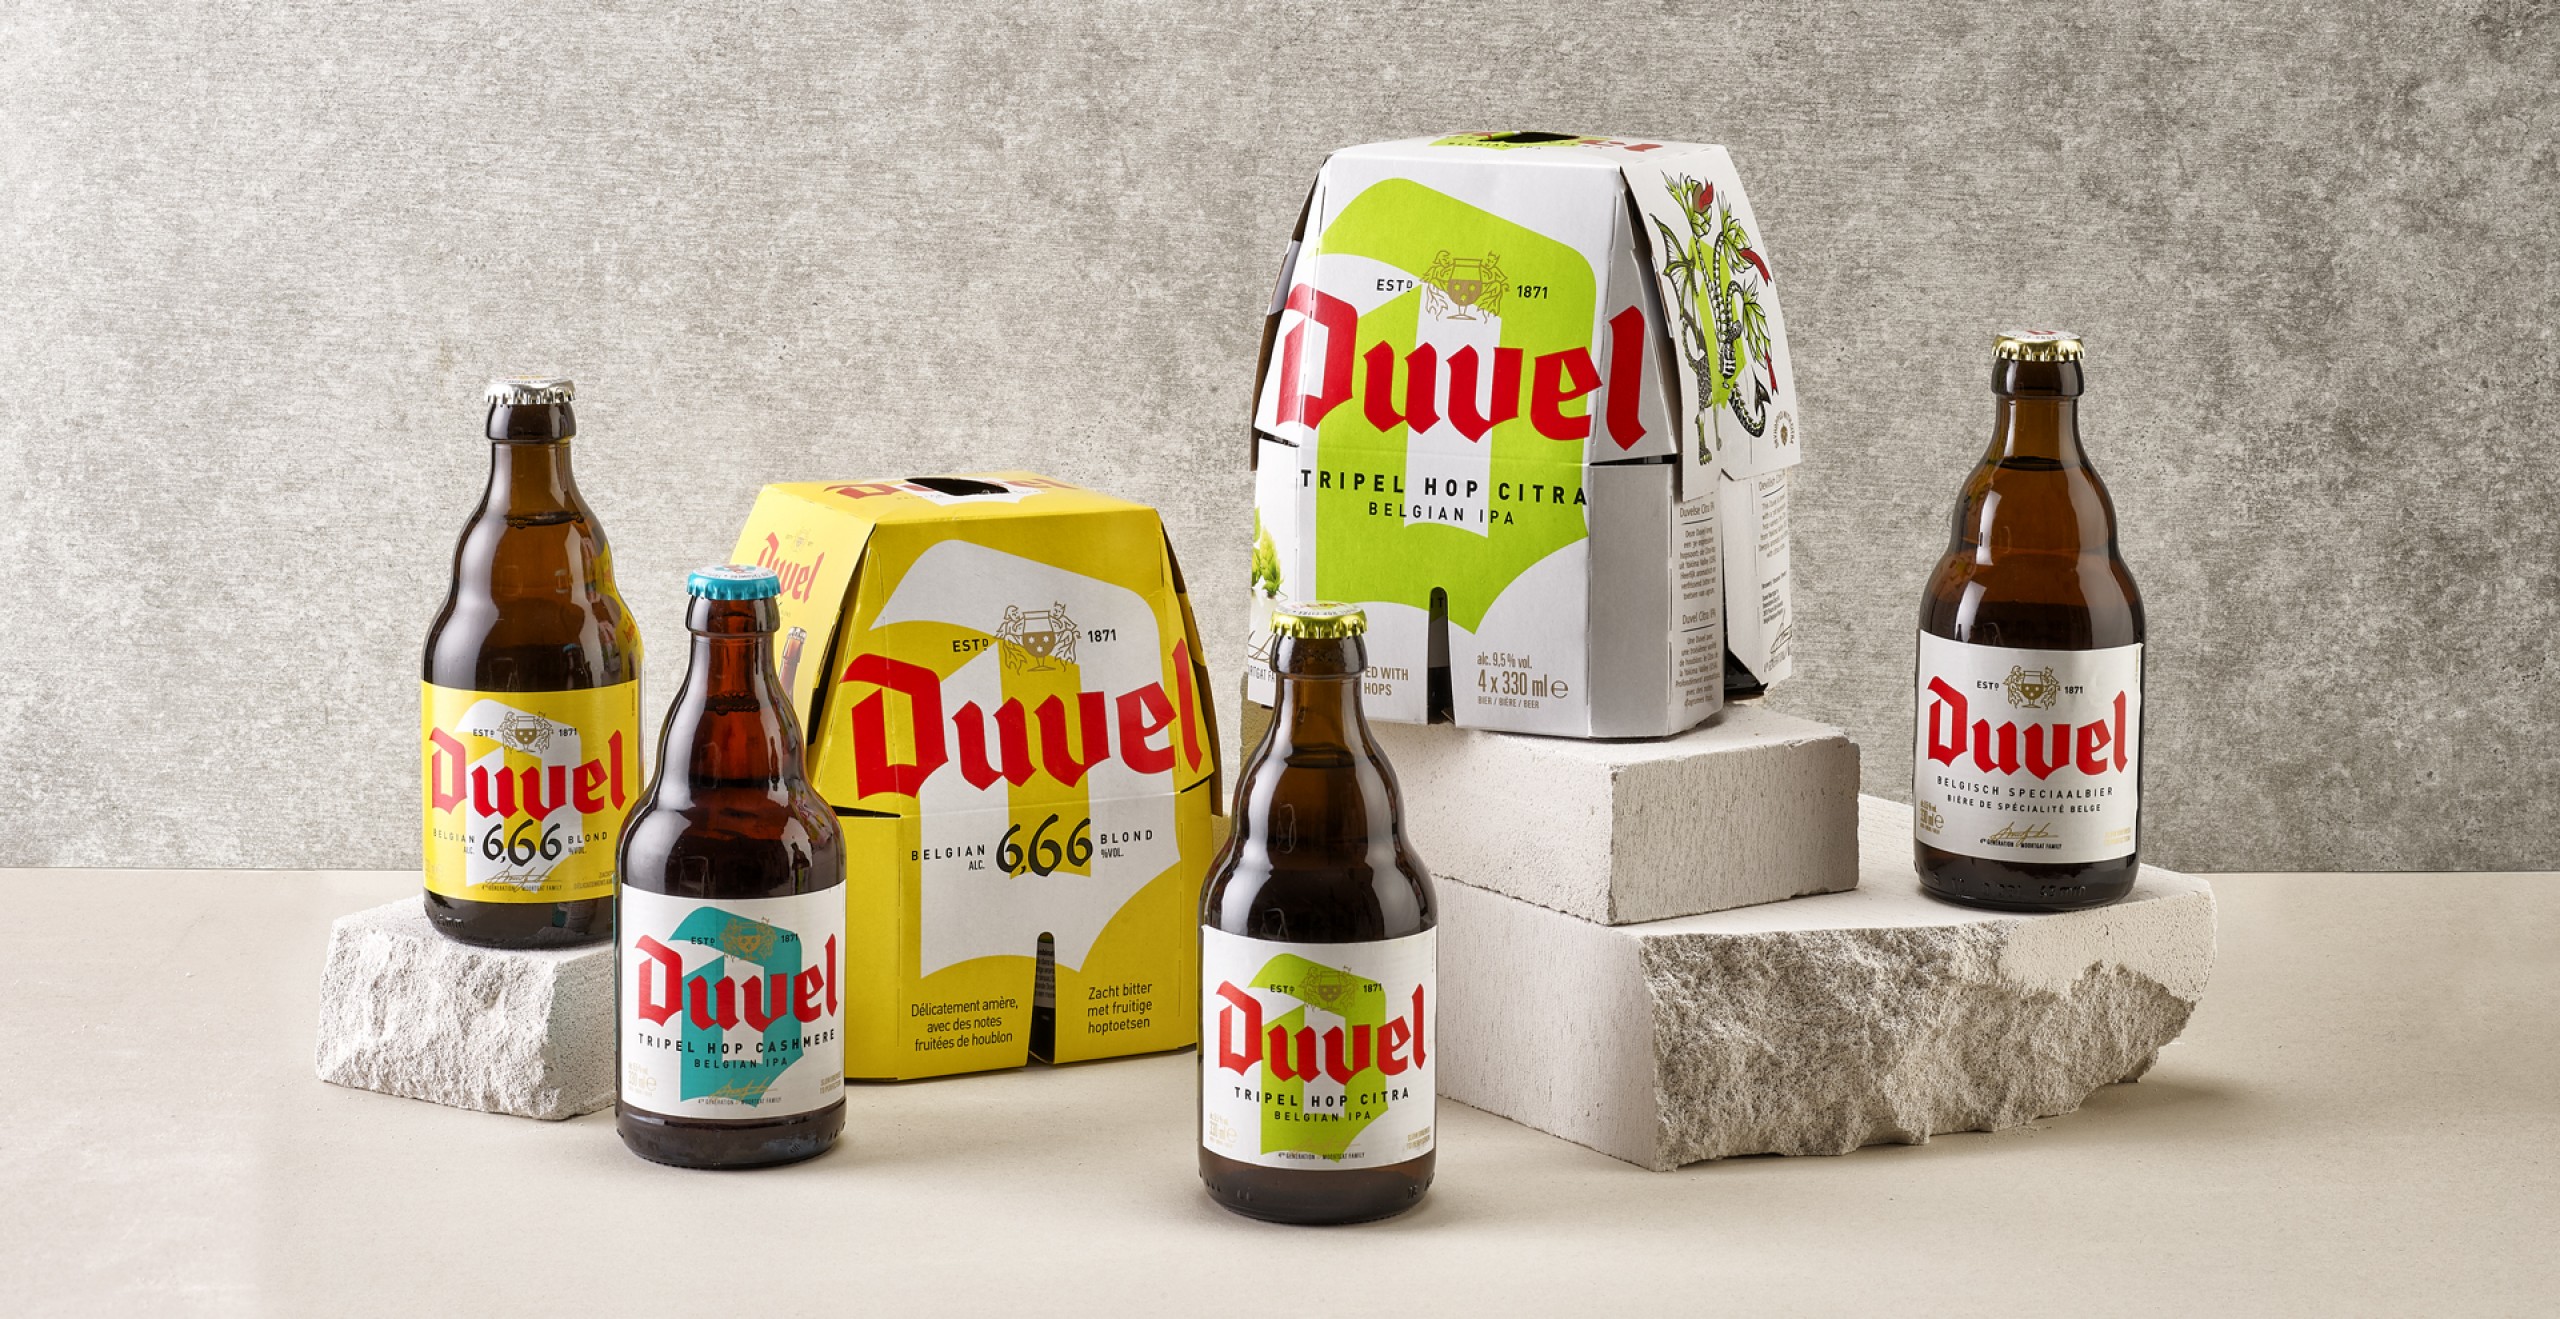 Quatre Mains package design - Package design duvel, moortgat, beer, quatre mains